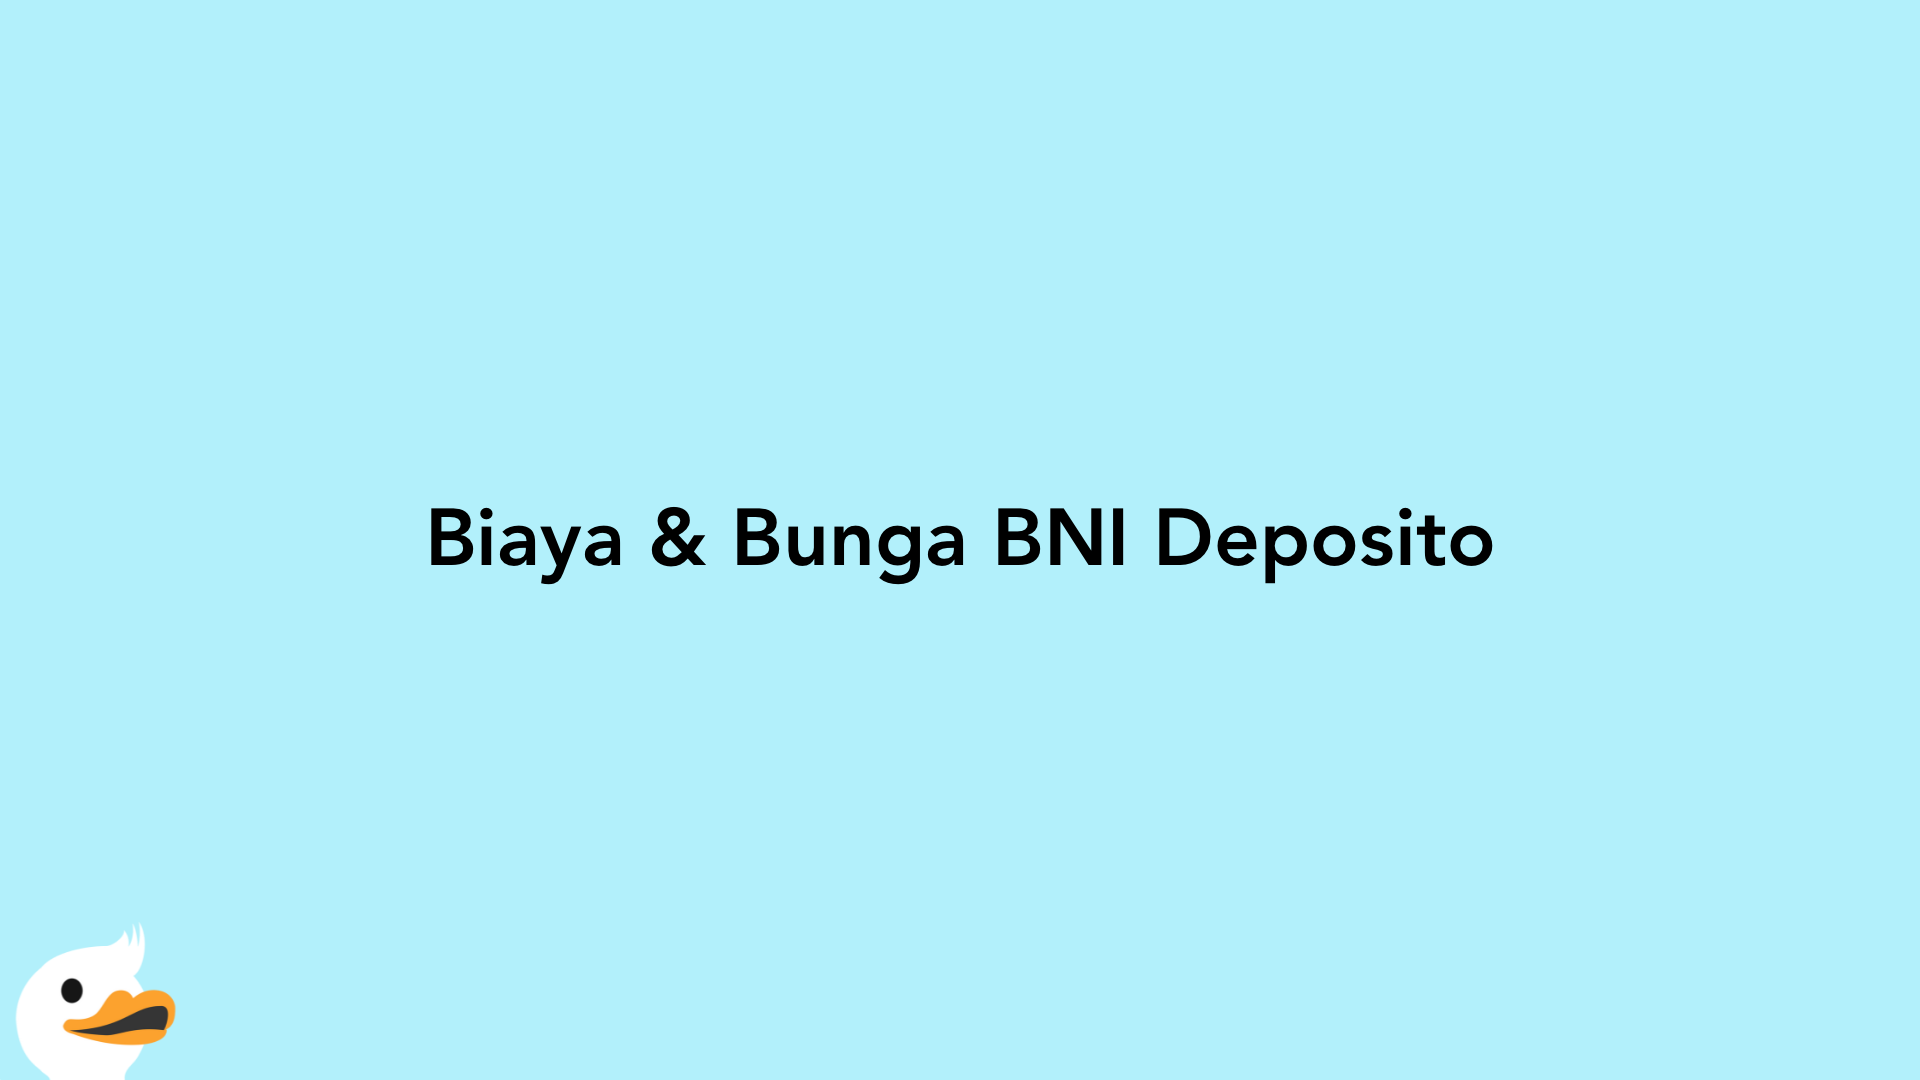 Biaya & Bunga BNI Deposito